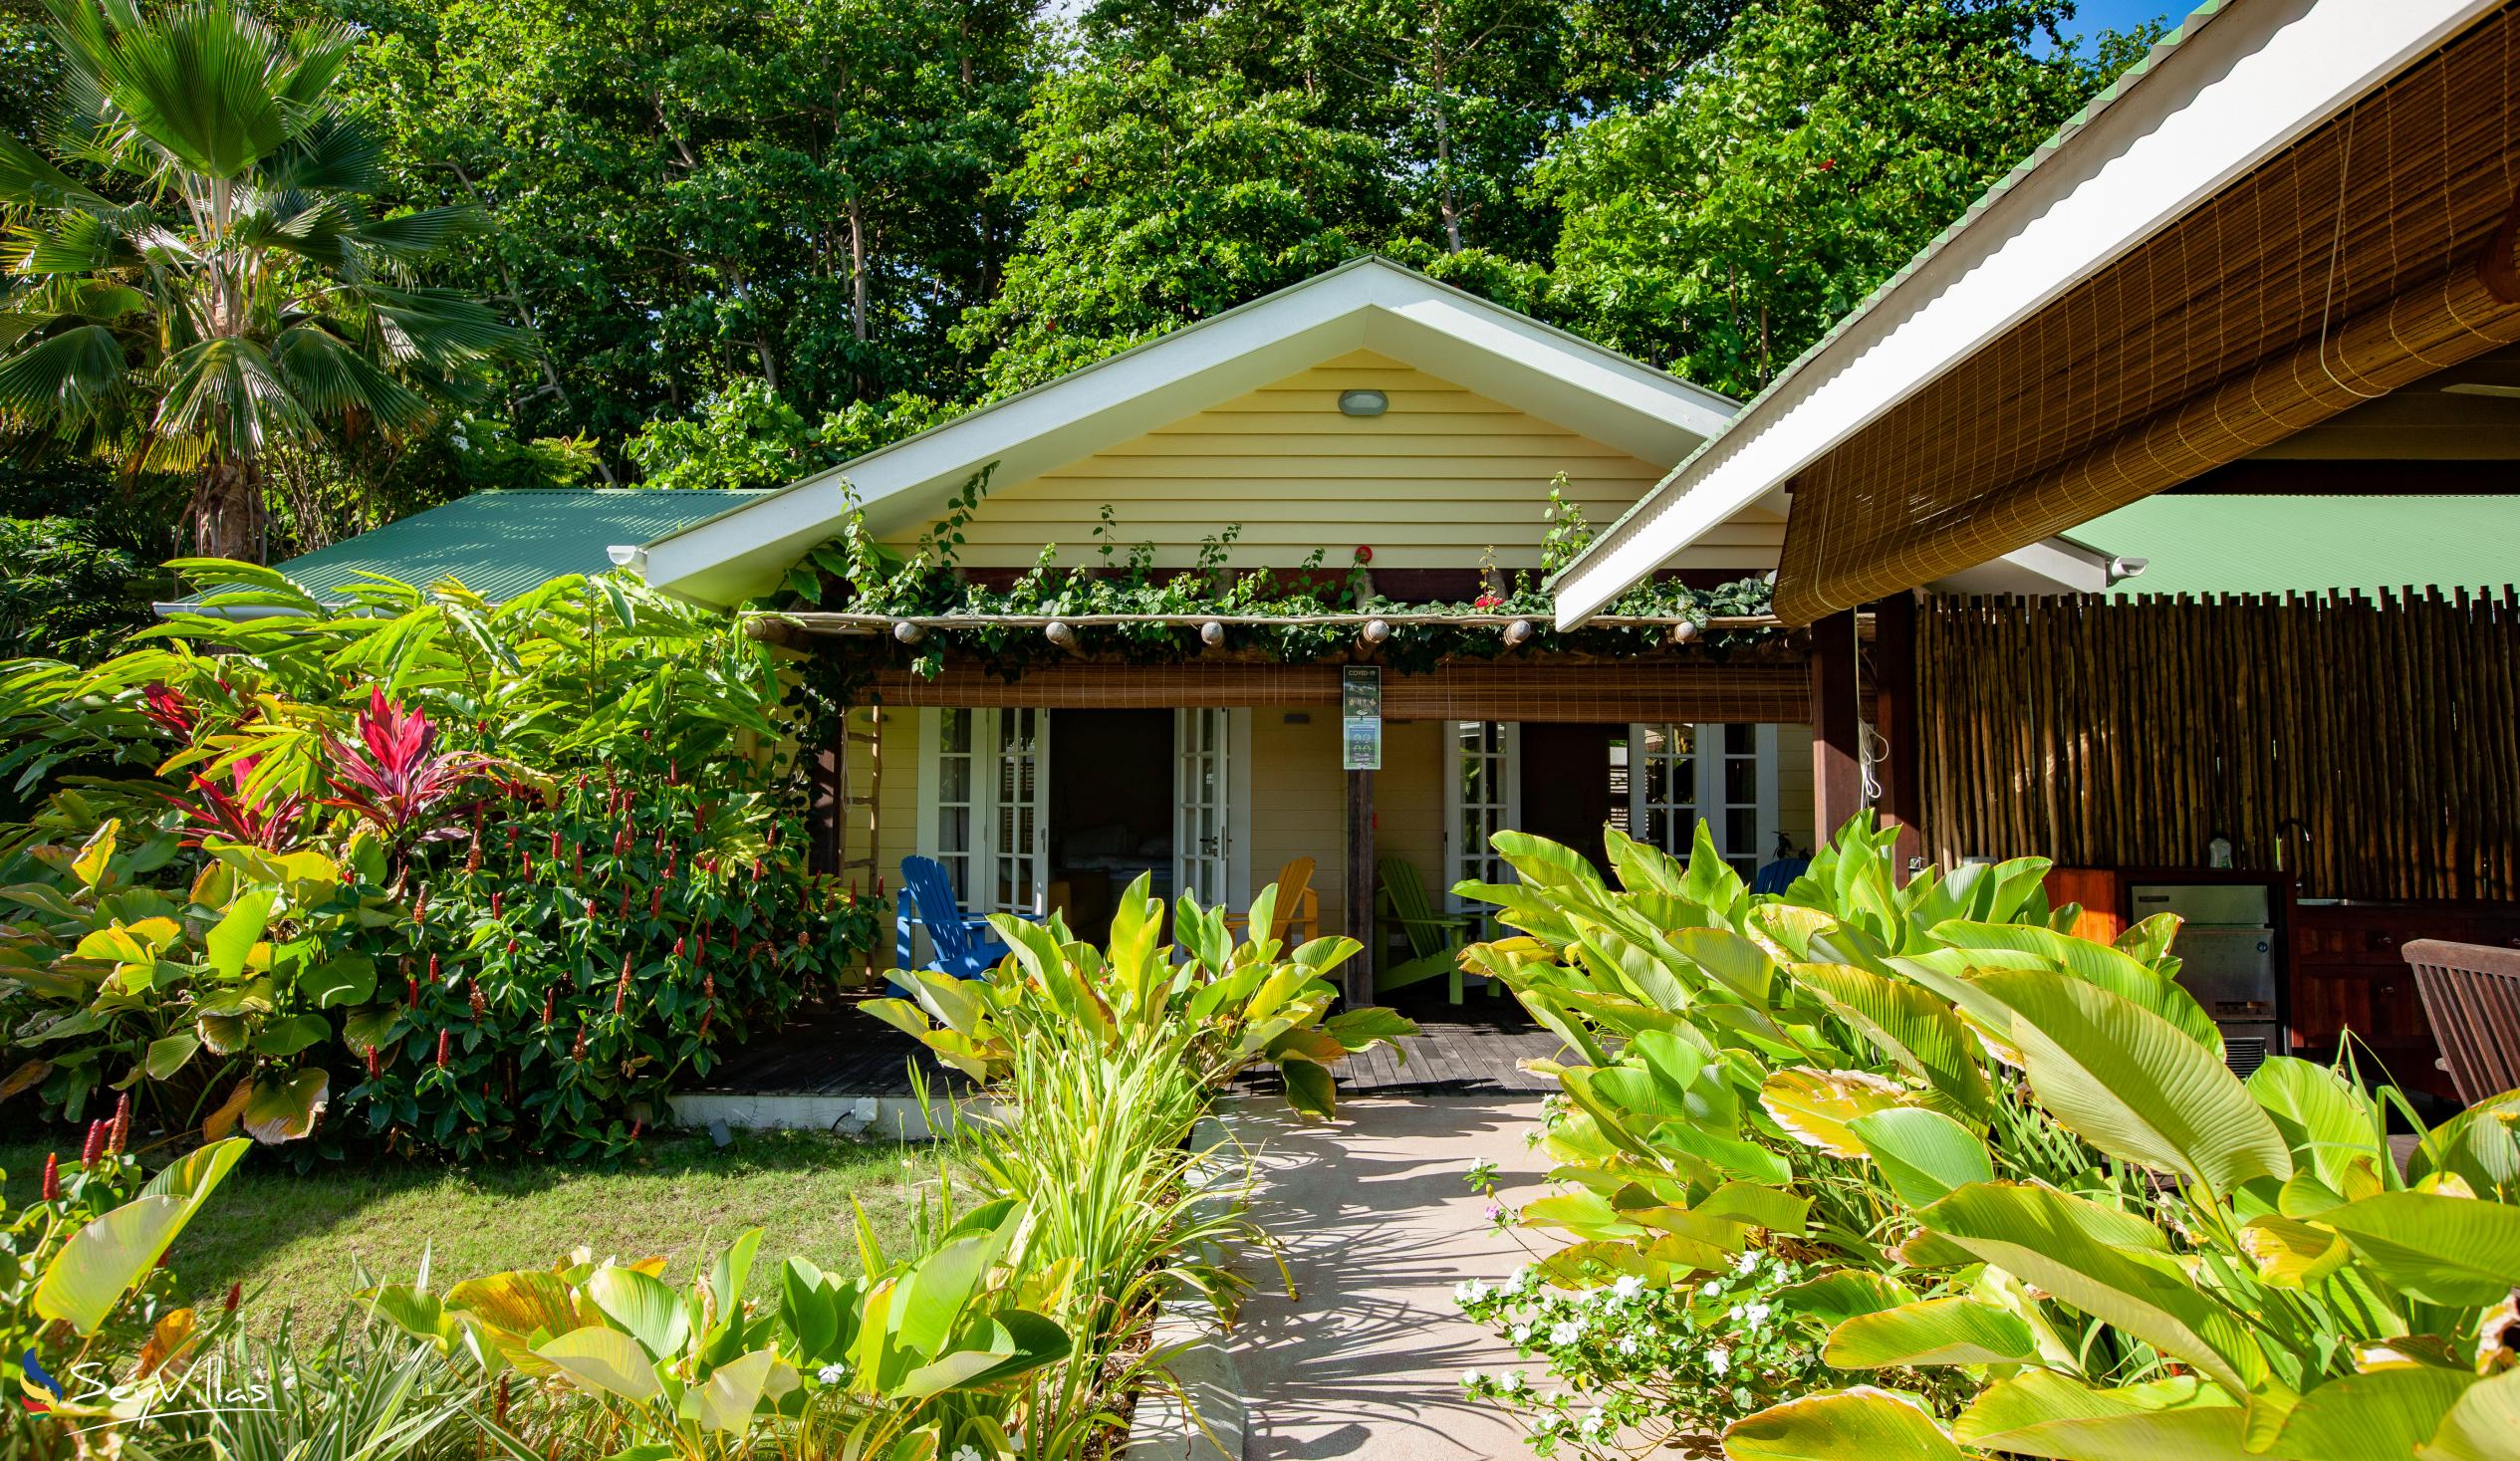 Photo 23: Residence Praslinoise - Outdoor area - Praslin (Seychelles)